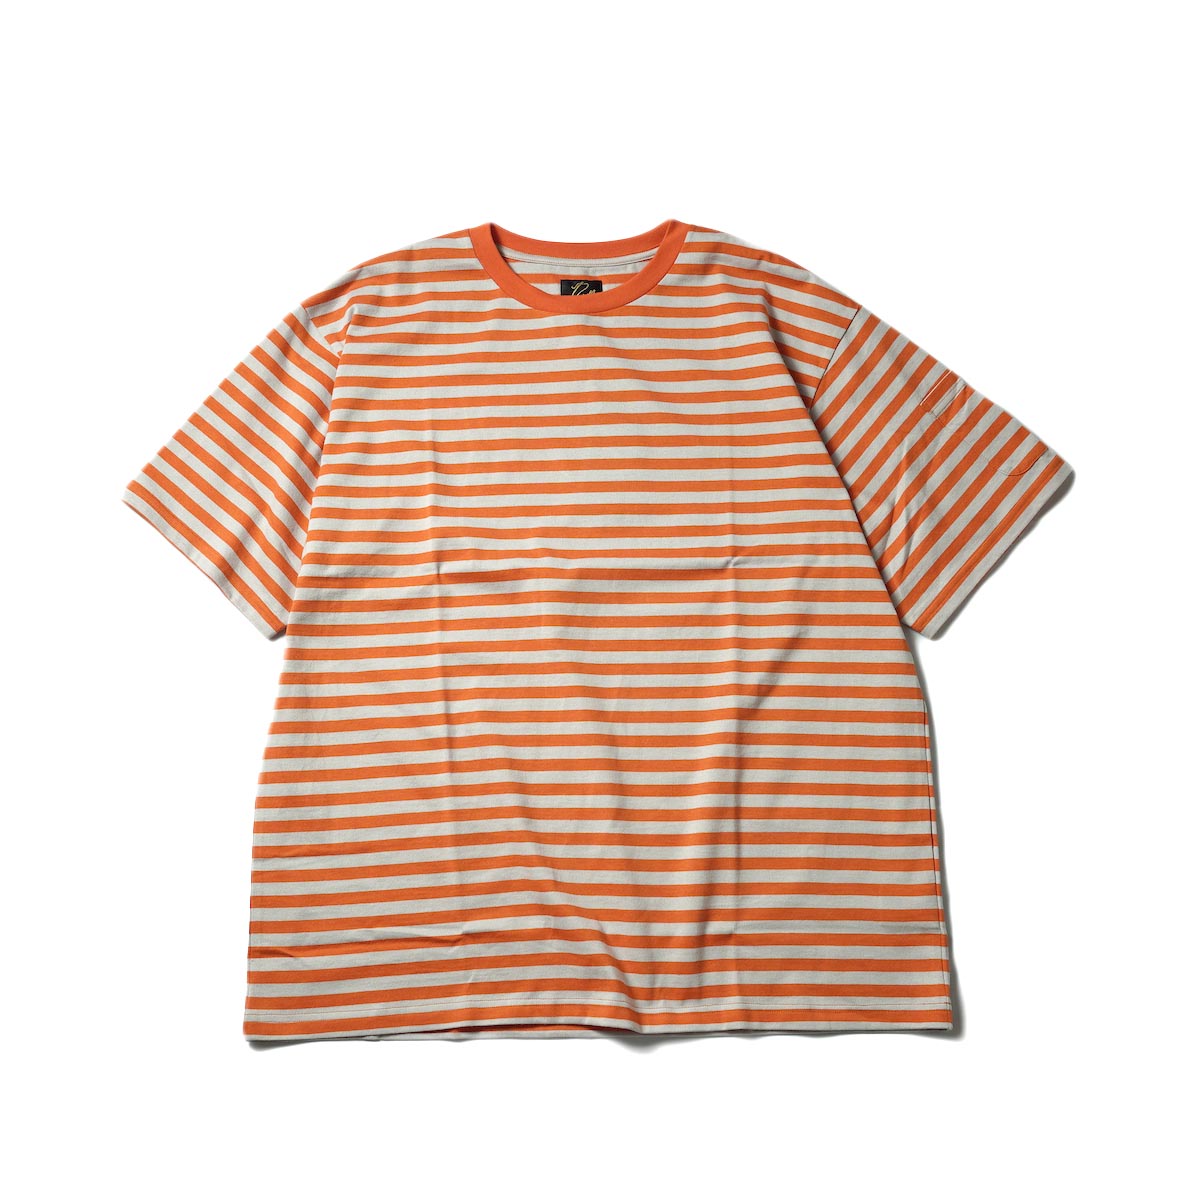 Needles / S/S Crew Neck Tee - Cotton Stripe Jersey (Orange/Beige)